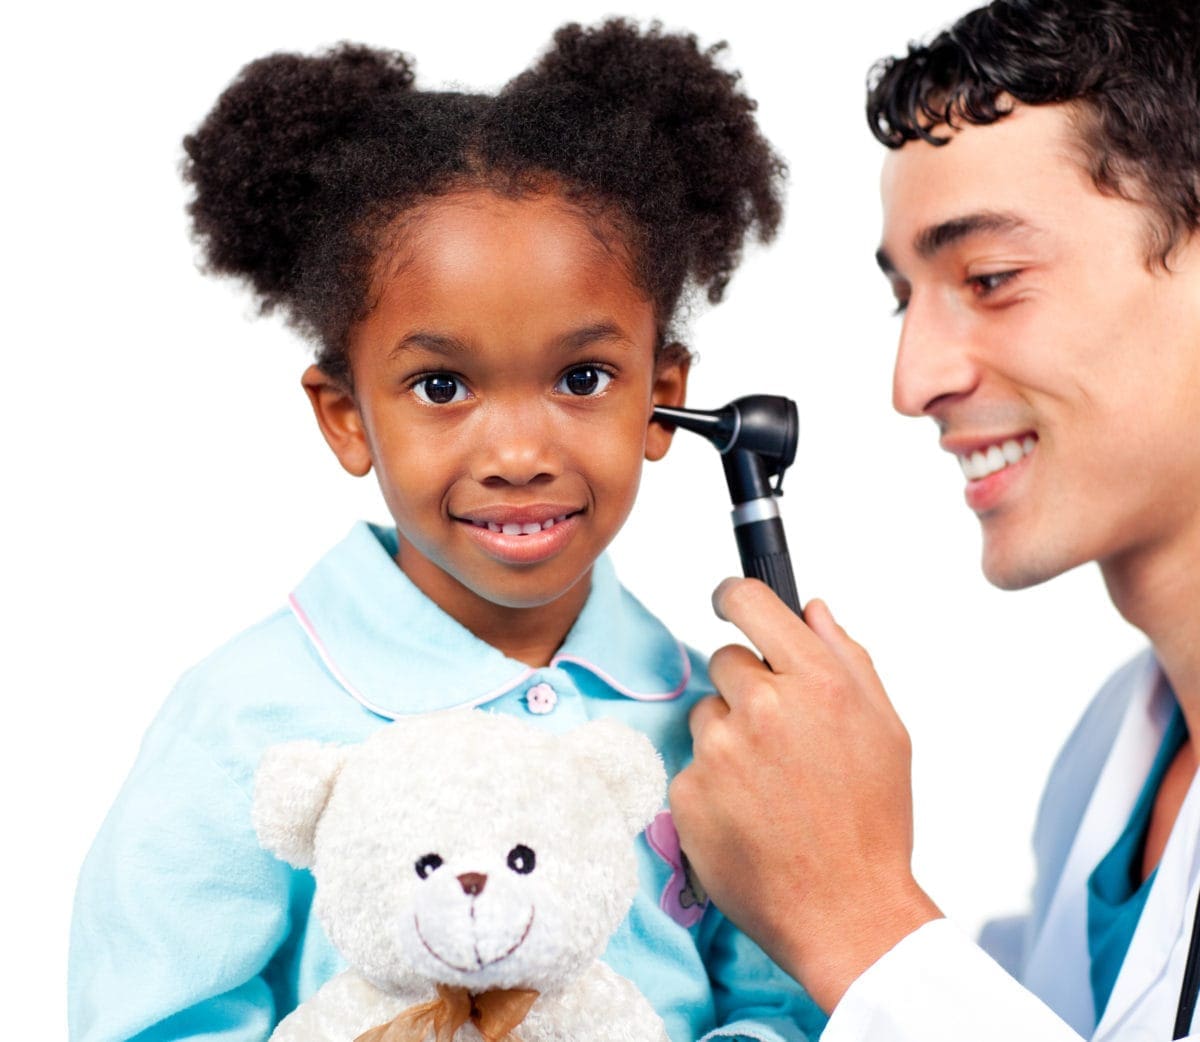 Hearing Evaluation in Children - Hearing Test For Kids | familydoctor.org